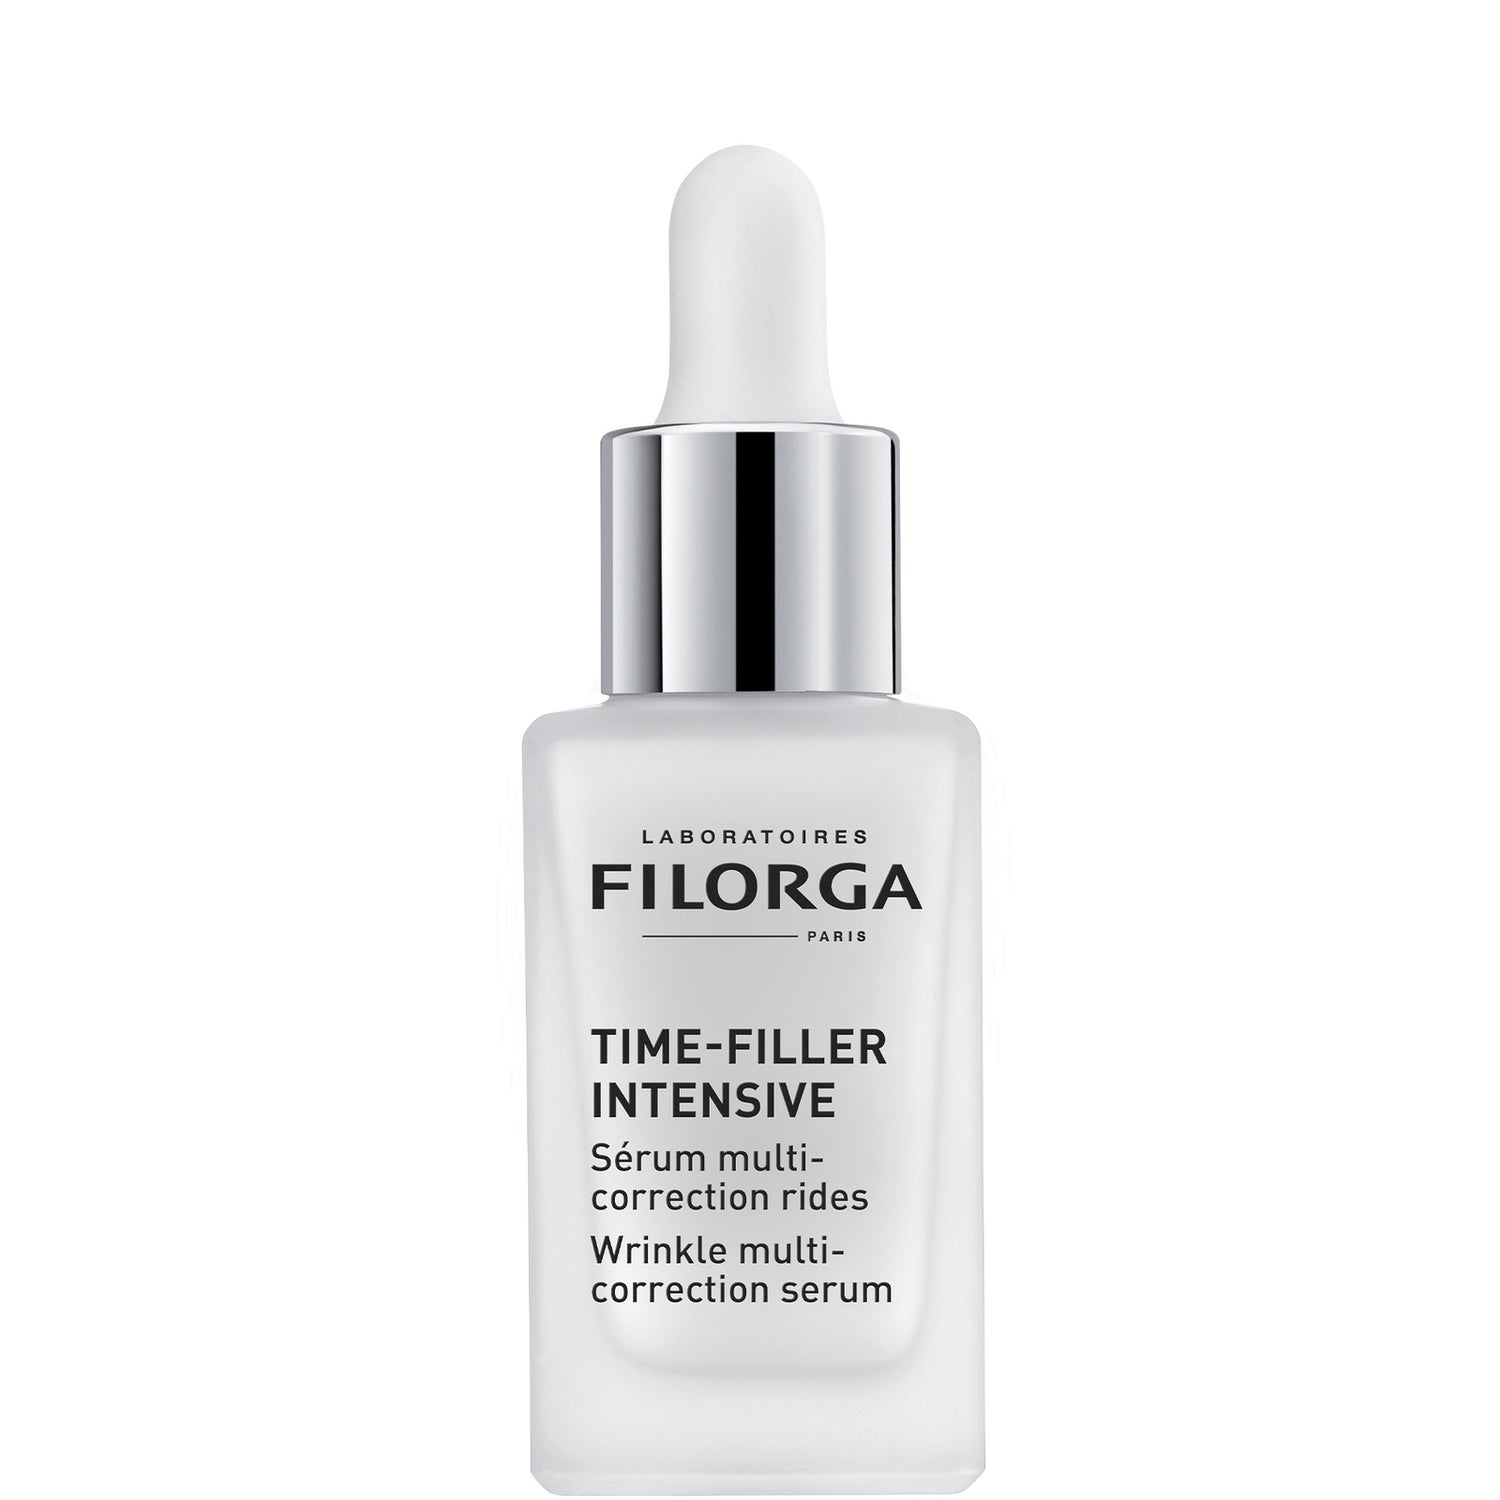 Filorga Time-Filler Intensive Concentrated Anti-Aging Face Serum (1 oz.)